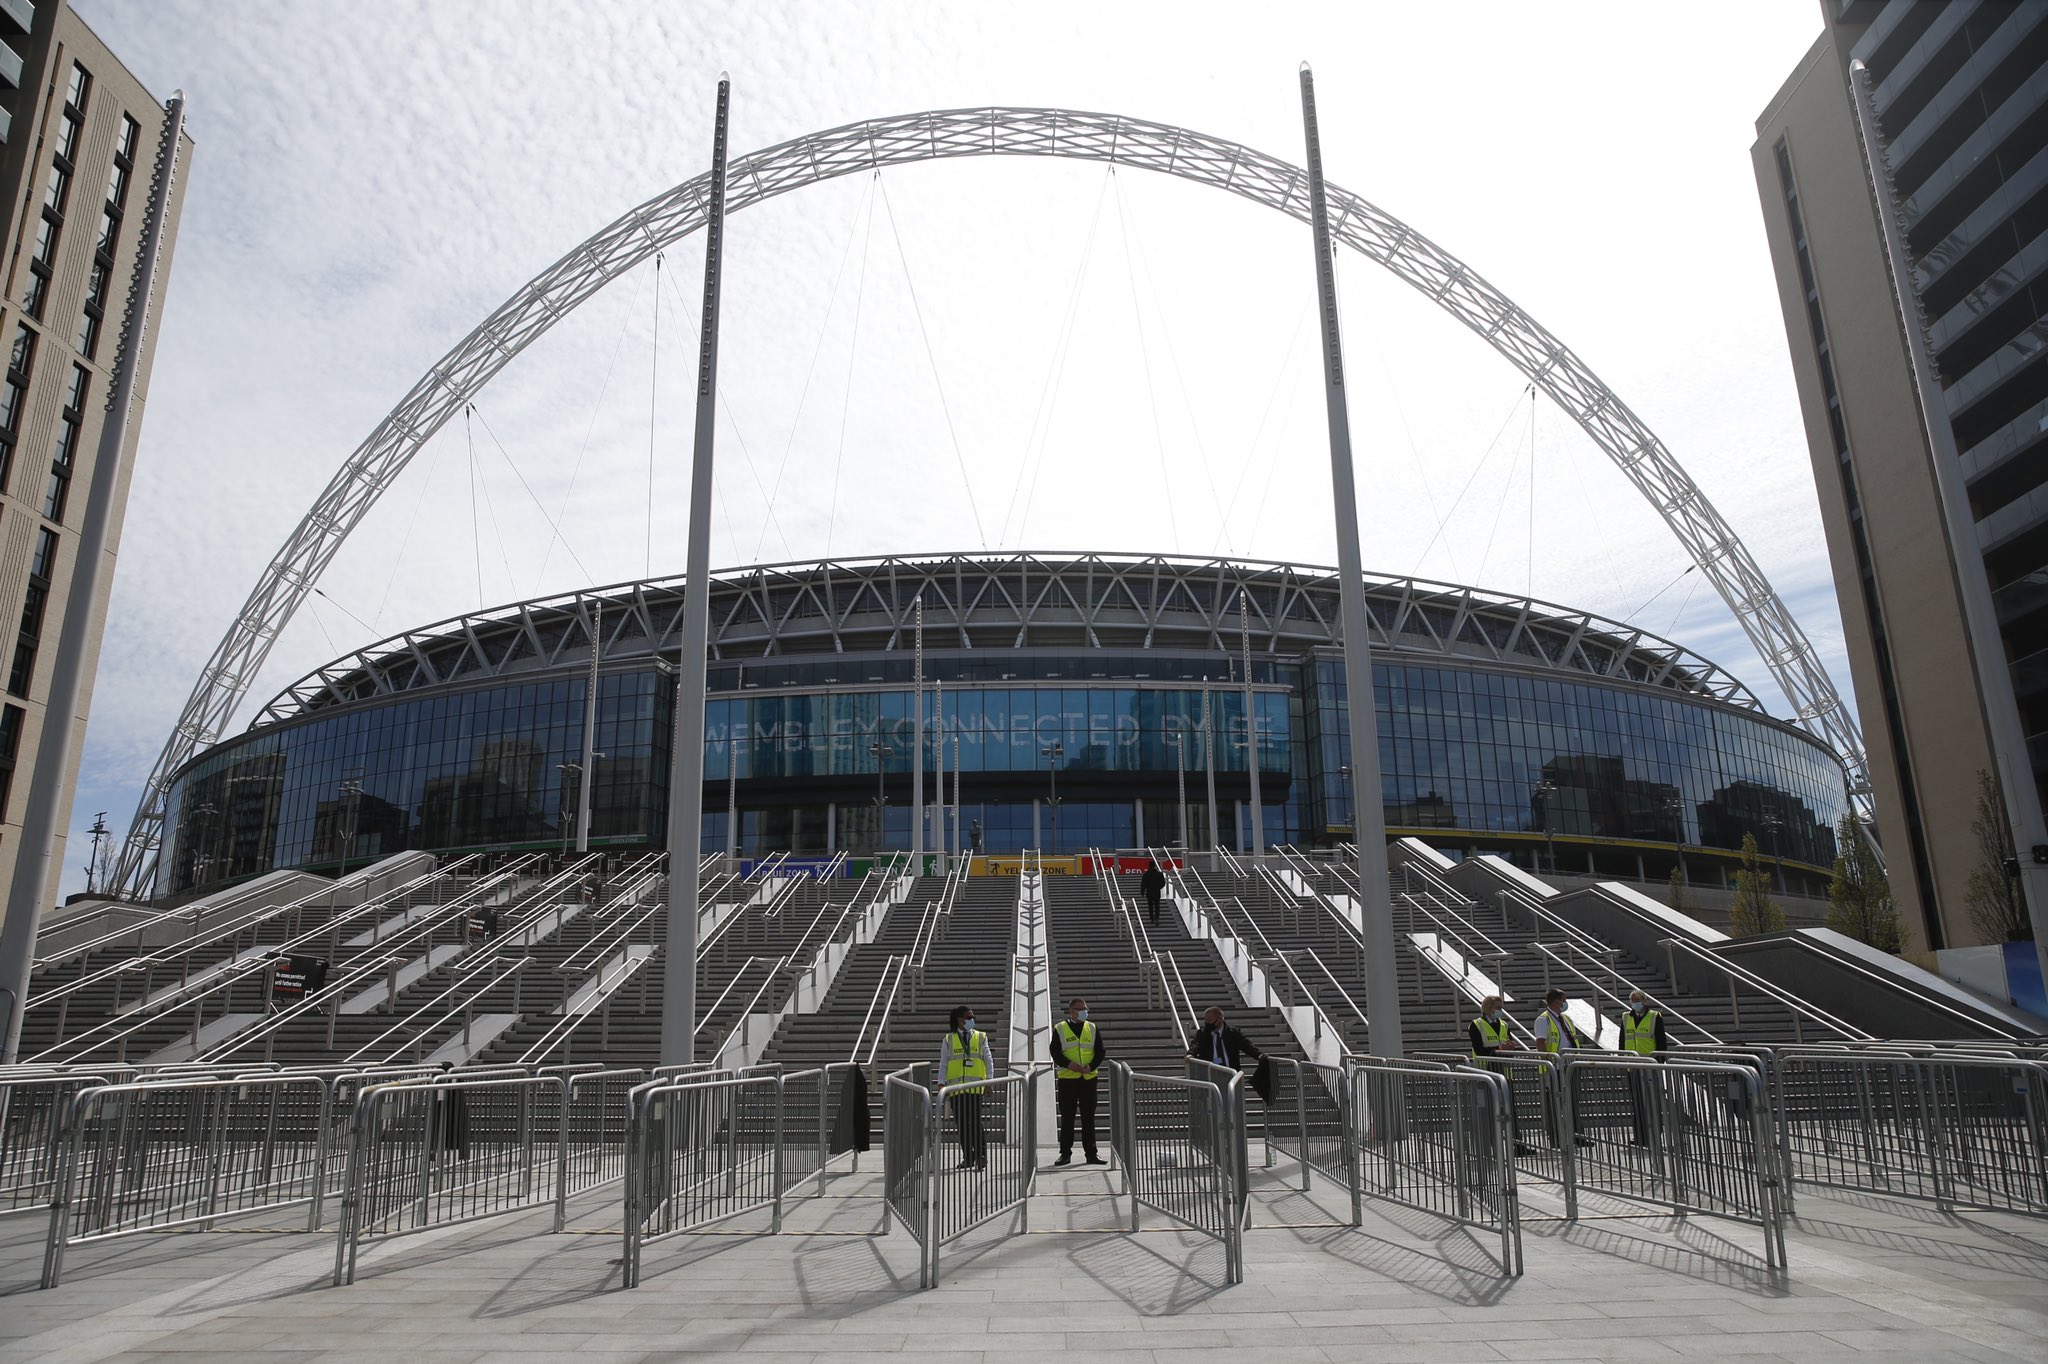 fonte immagine: Twitter ufficiale Wembley